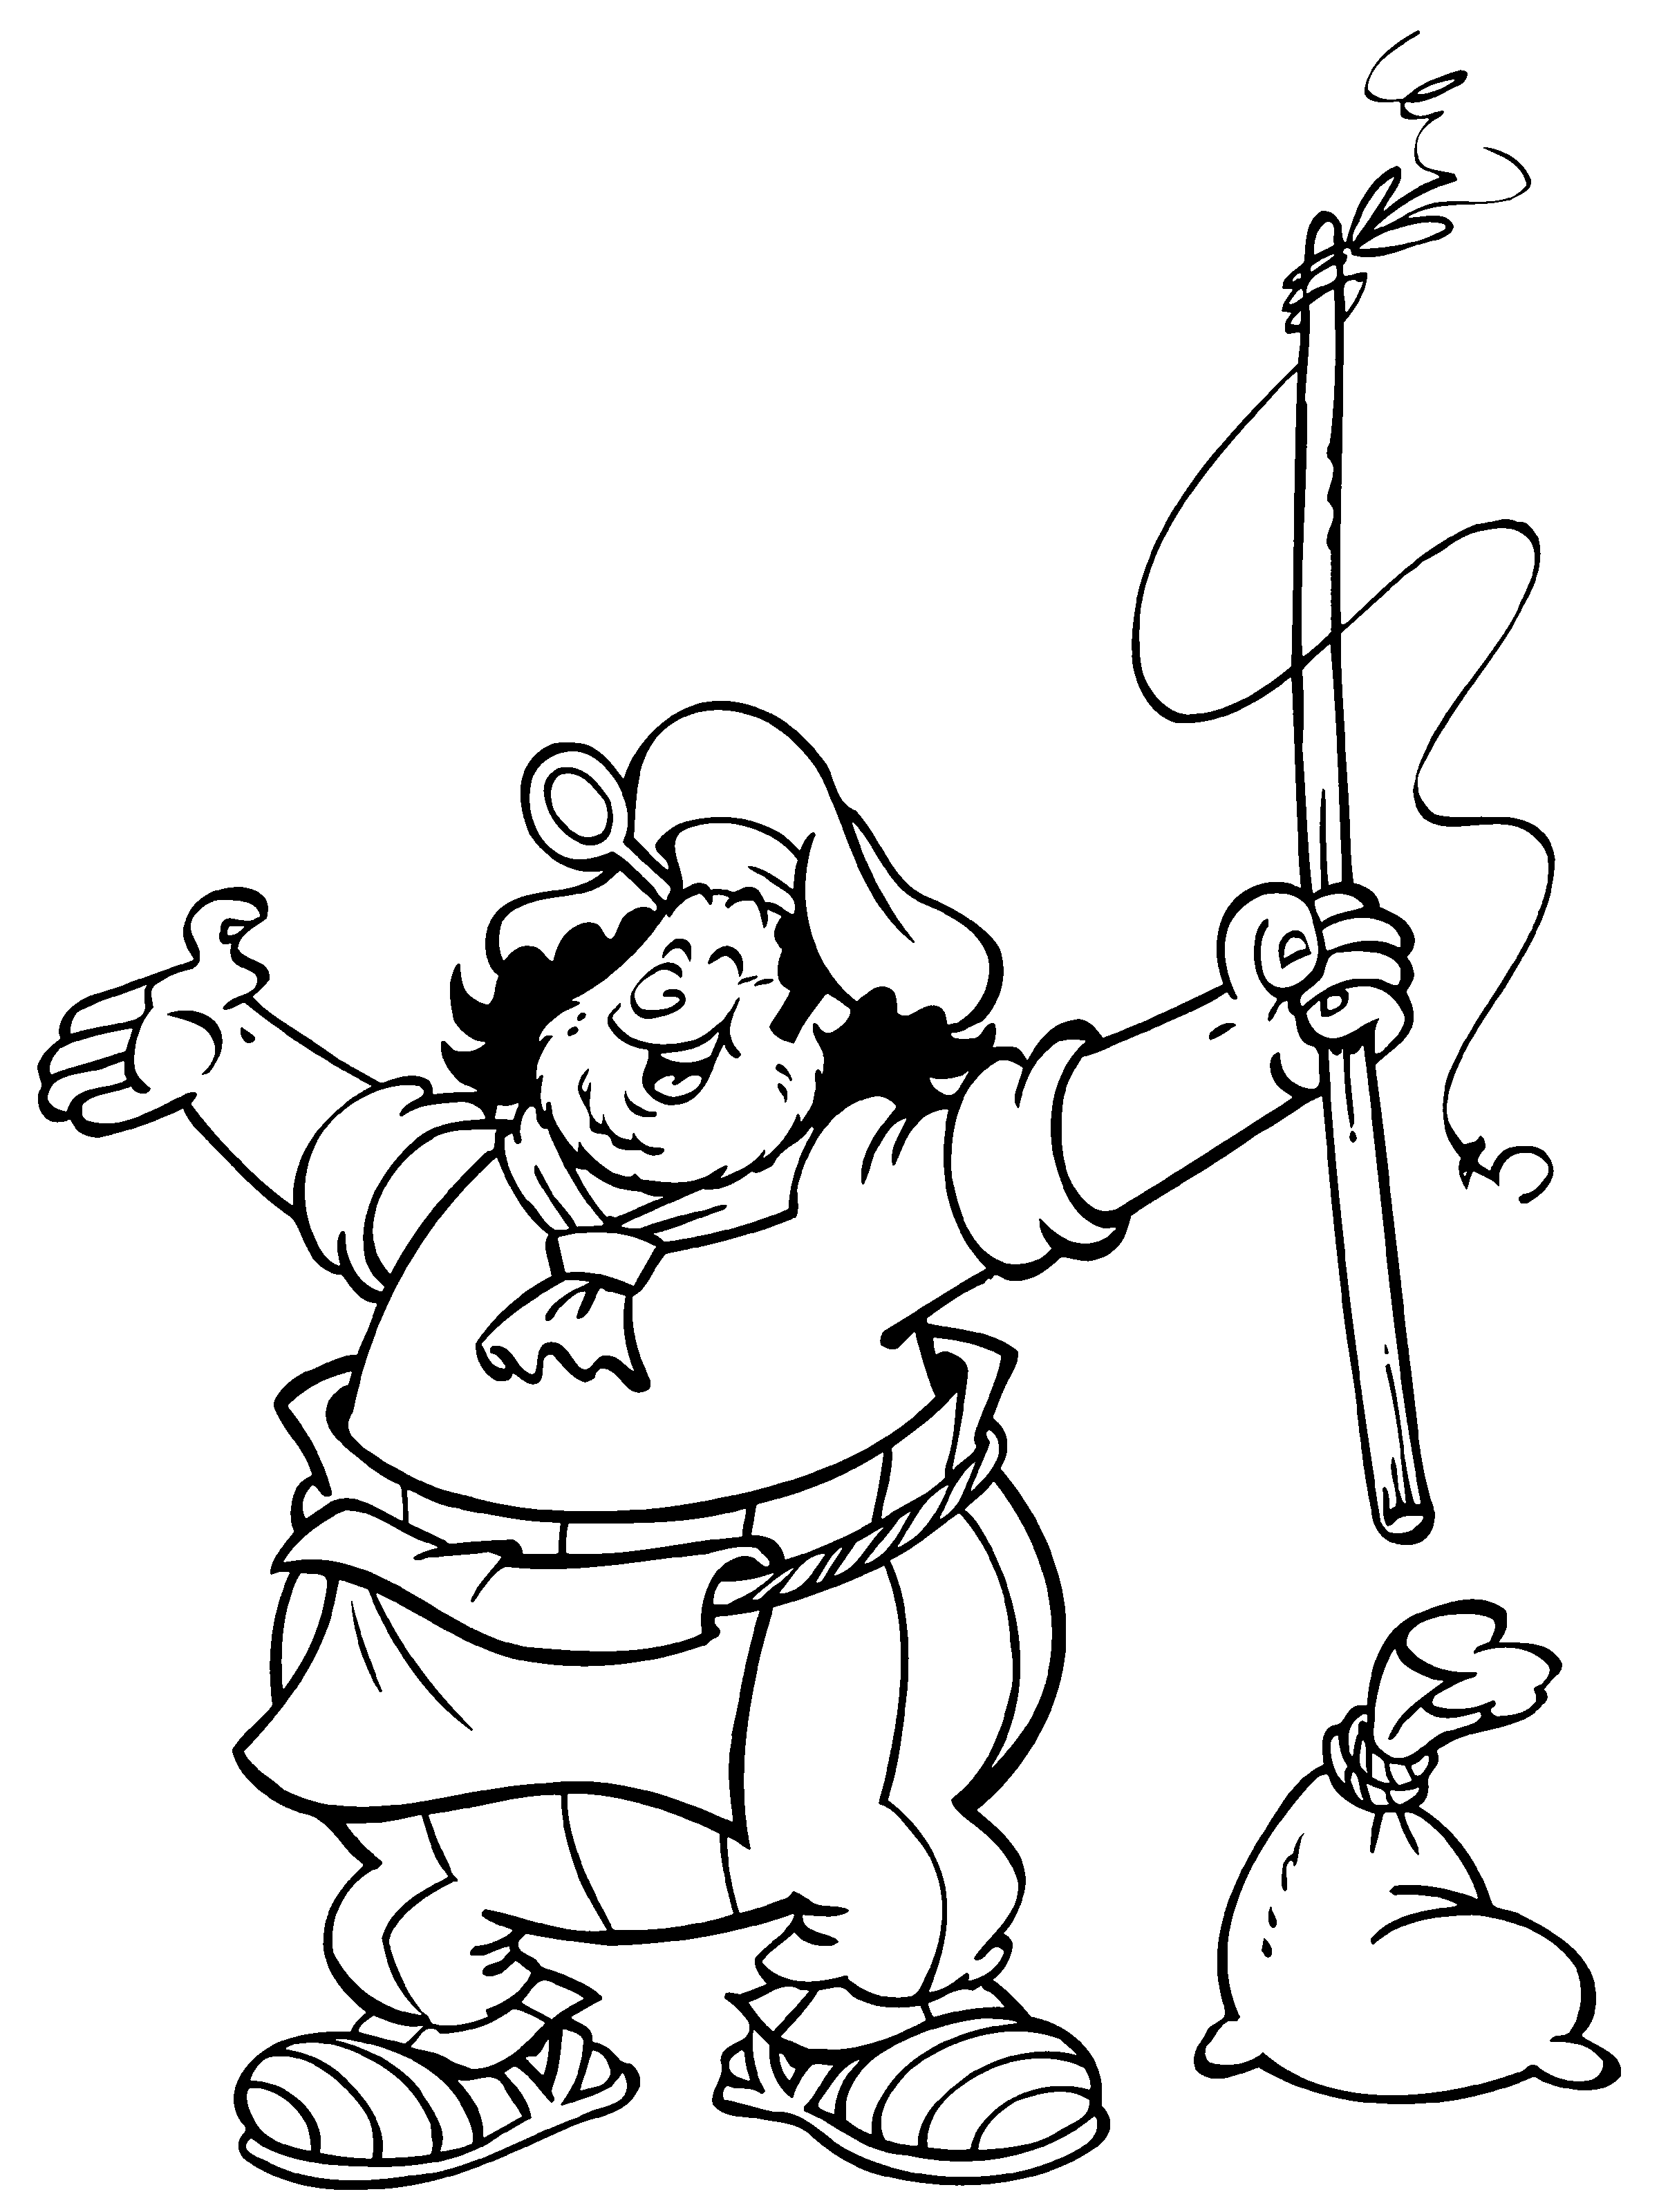 Piet pirate